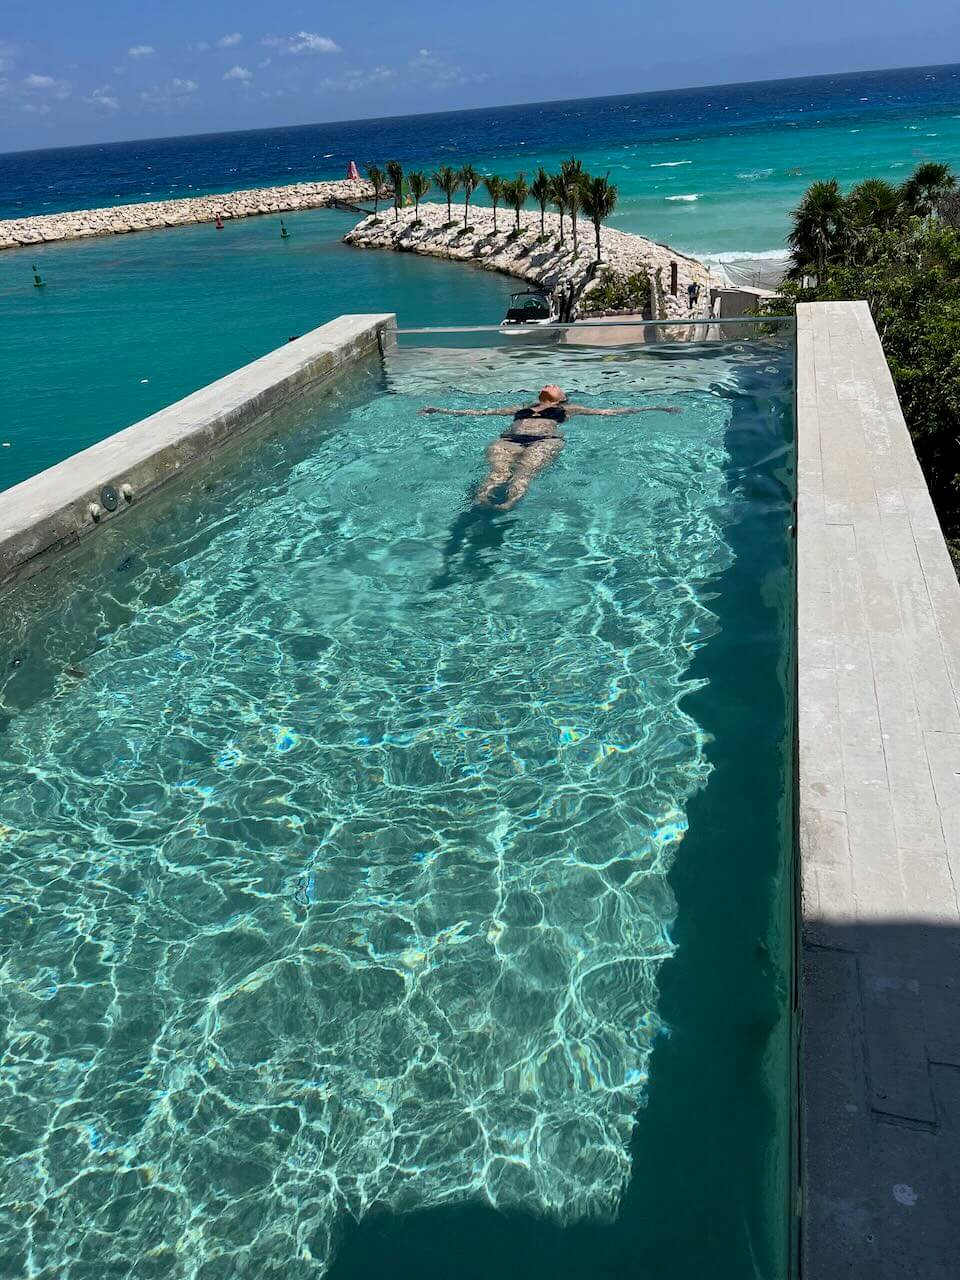 Girl floating in an infinity edge pool at La Casa de la Playa luxury hotel in Mexico.